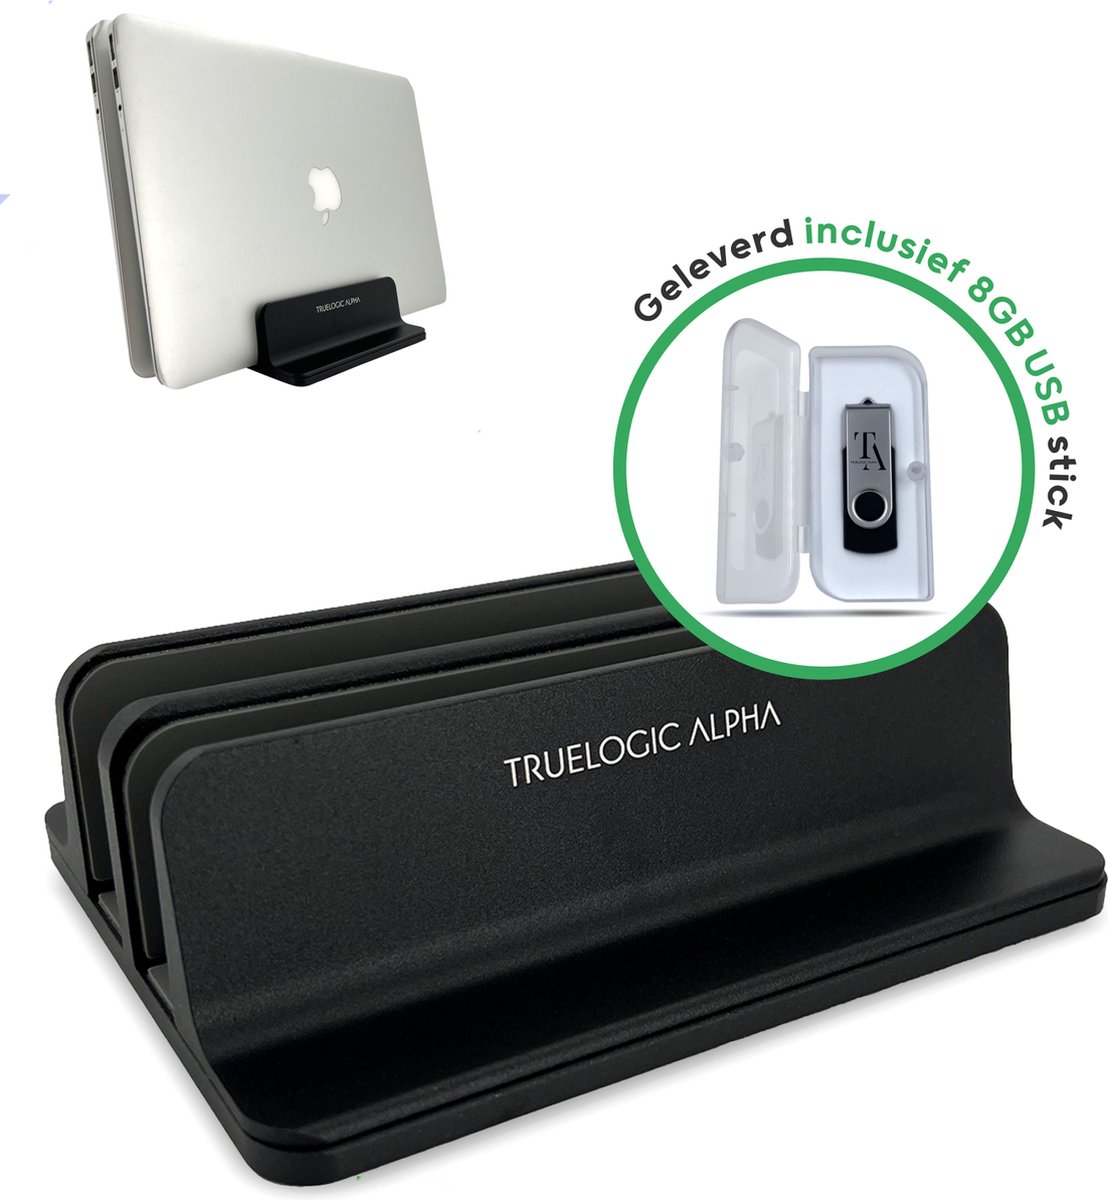 TrueLogic Alpha verticale laptop standaard - Geleverd inclusief 8GB USB stick - Laptop houder - Tablet standaard - Laptop standaard verstelbaar - Aluminium - Zwart